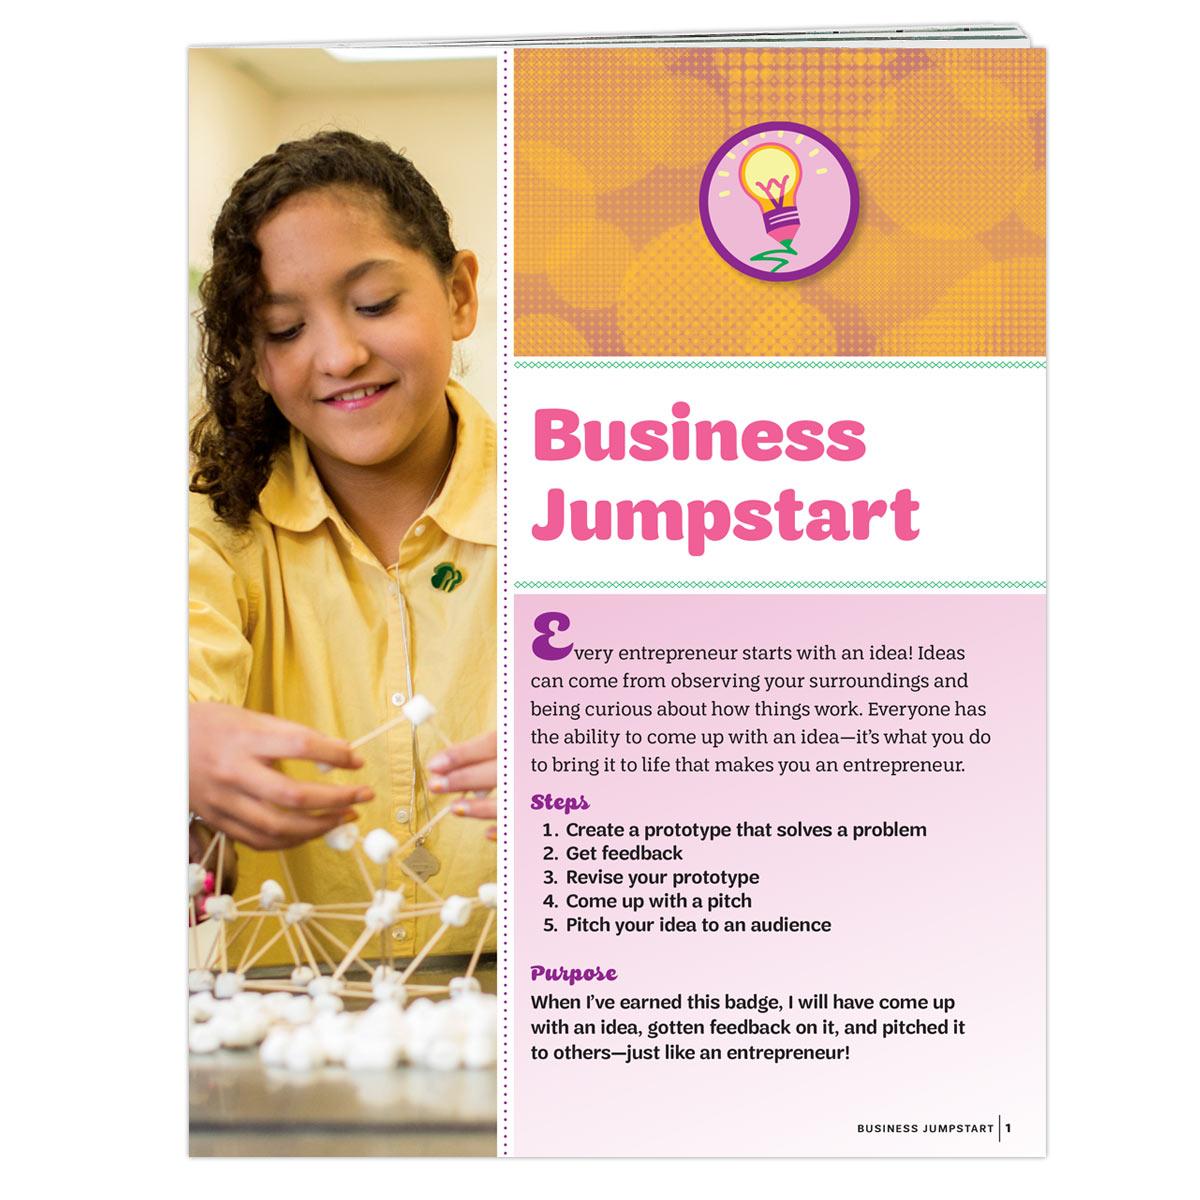 Business Jumpstart Badge Requirements